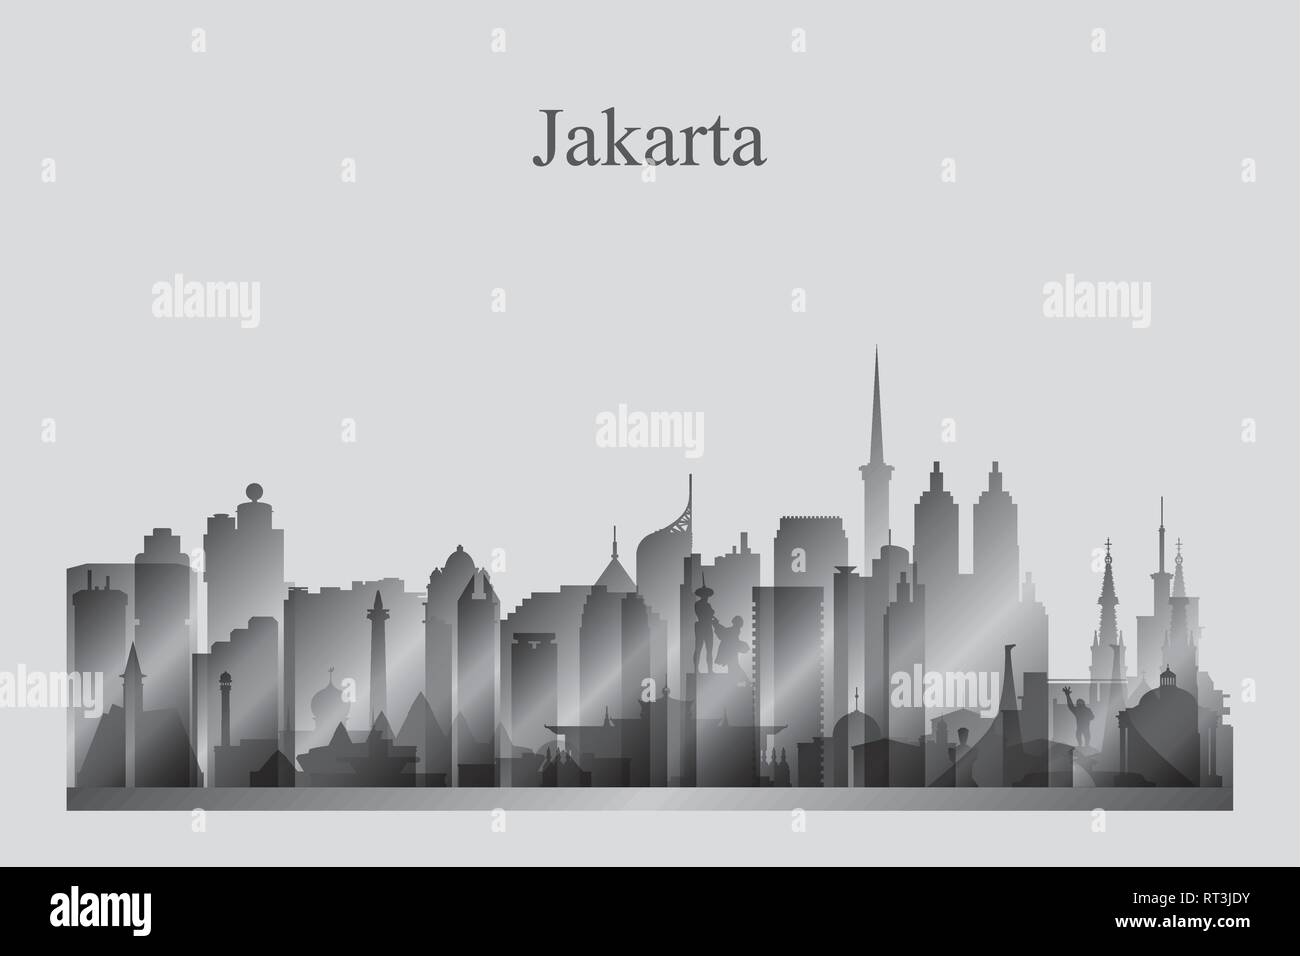 Jakarta city skyline silhouette in grayscale vector illustration Stock Vector